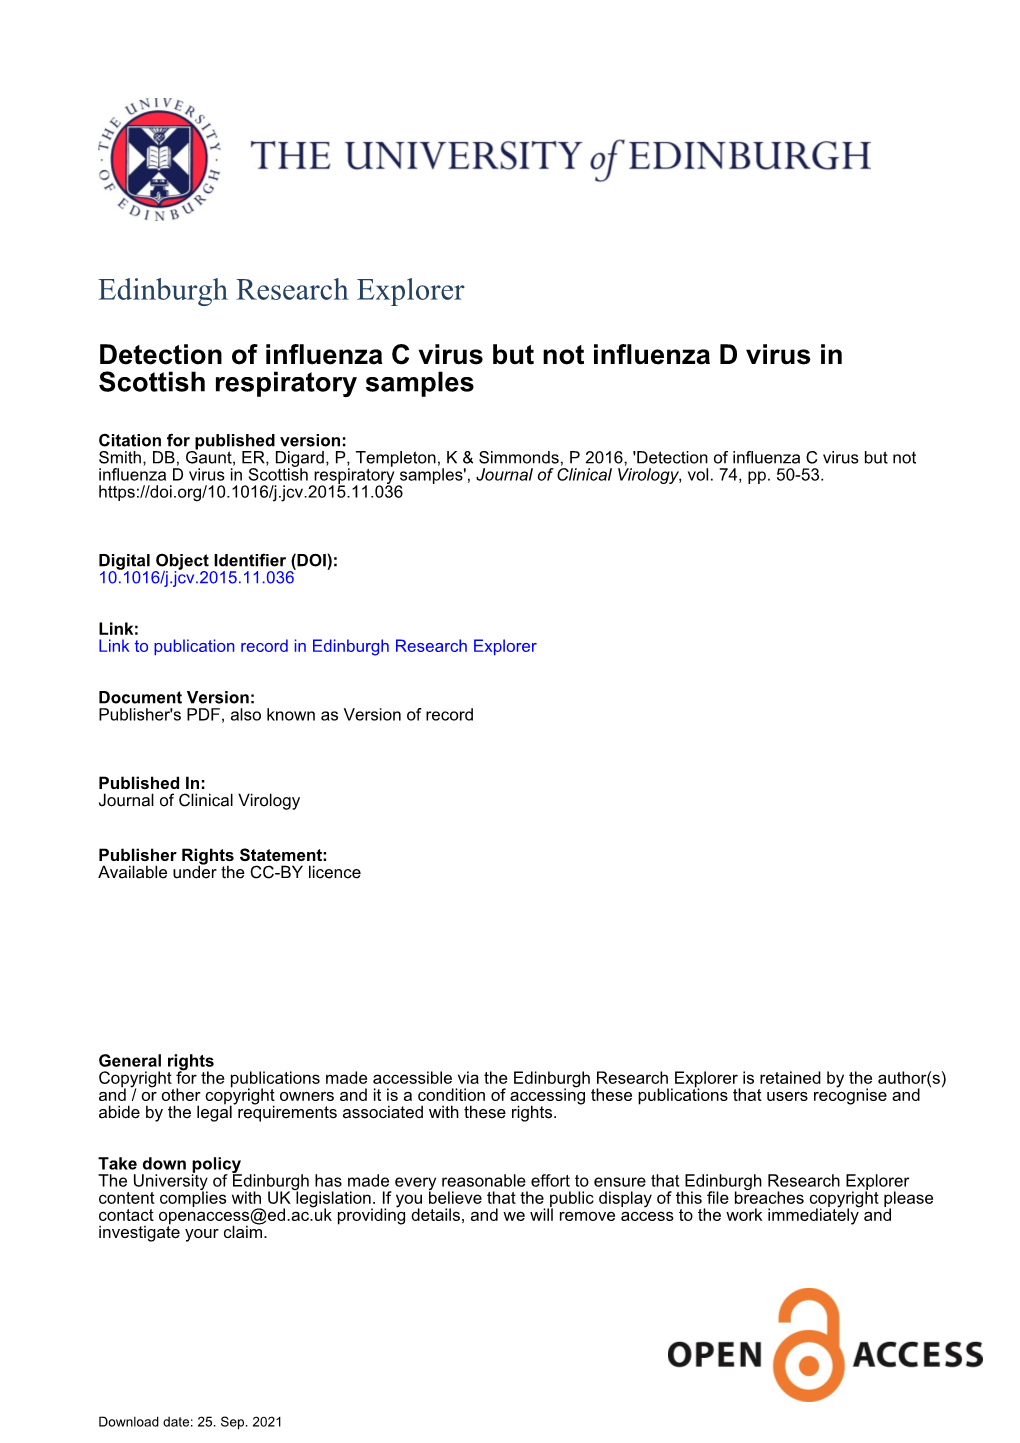 Detection of Influenza C Virus but Not Influenza D Virus in Scottish Respiratory Samples', Journal of Clinical Virology, Vol